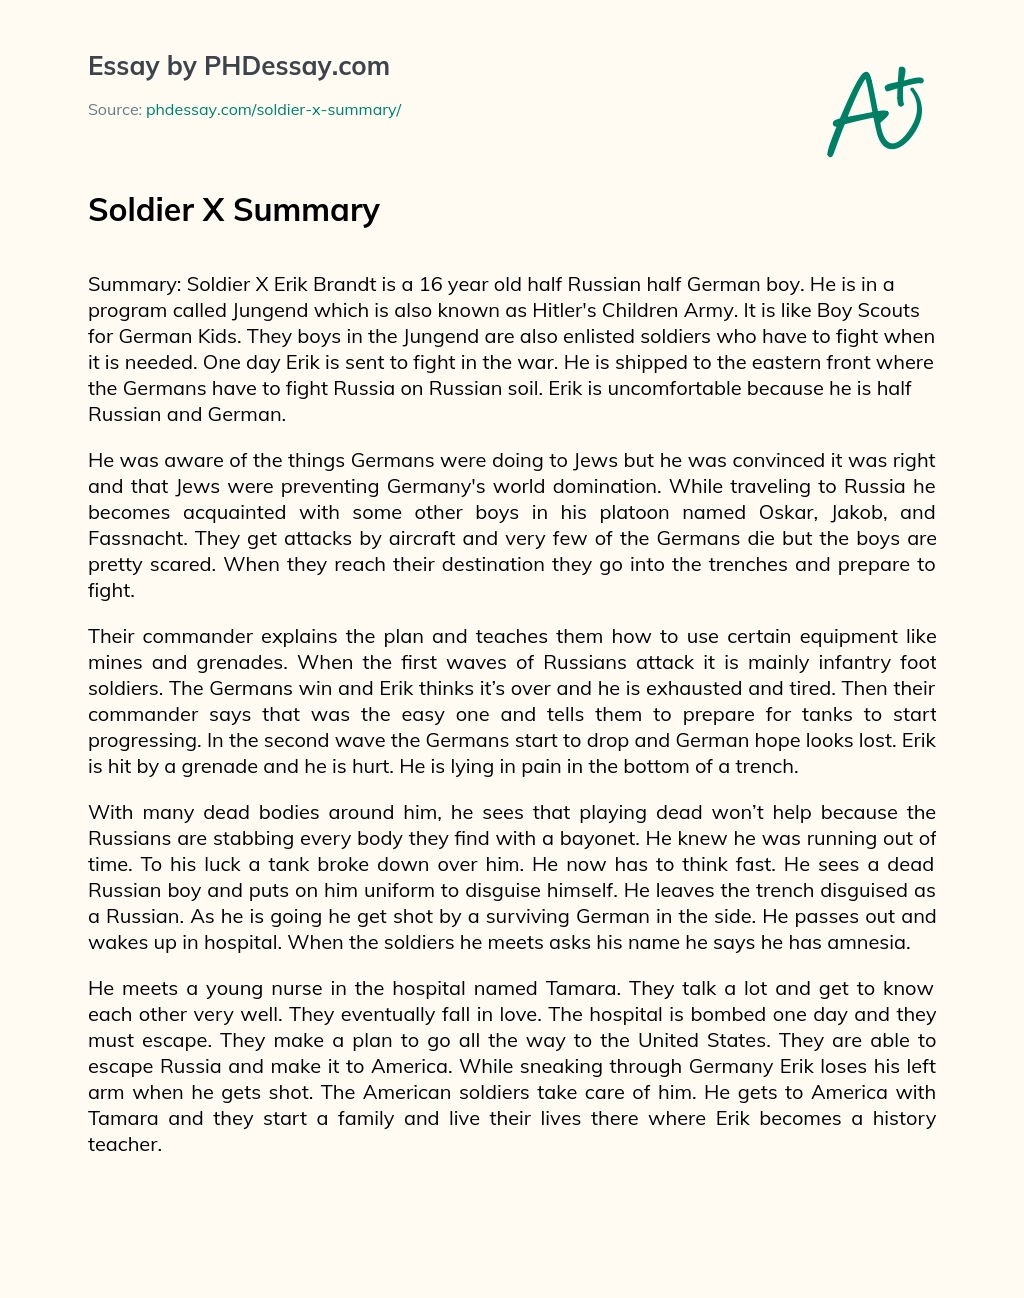 Soldier X Summary essay